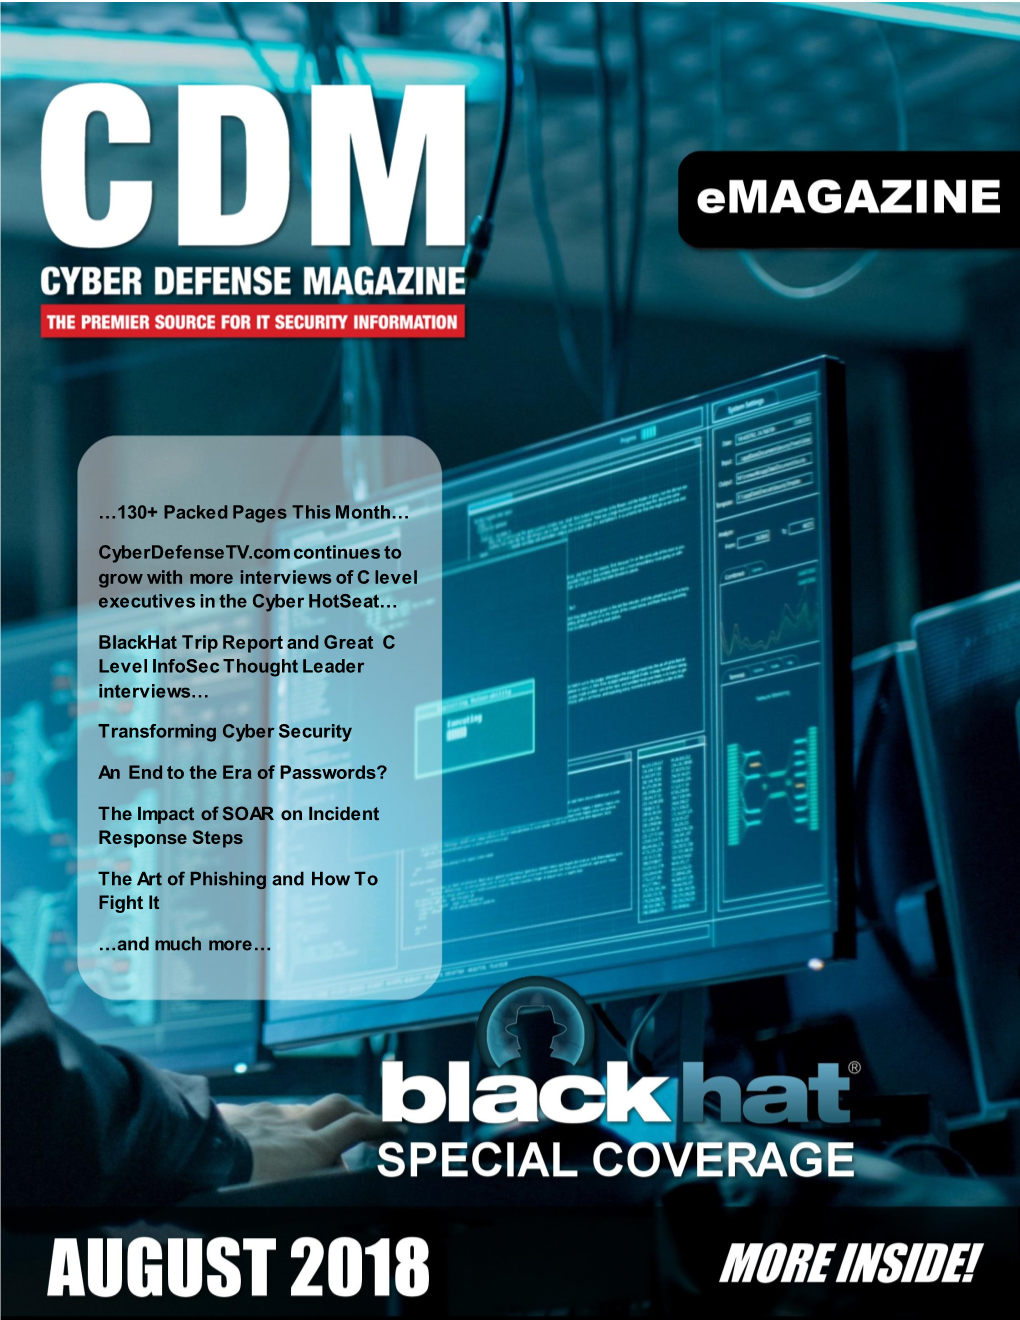 Cyber Defense Emagazine – June 2018 Edition Copyright © Cyber Defense Magazine, All Rights Reserved Worldwide